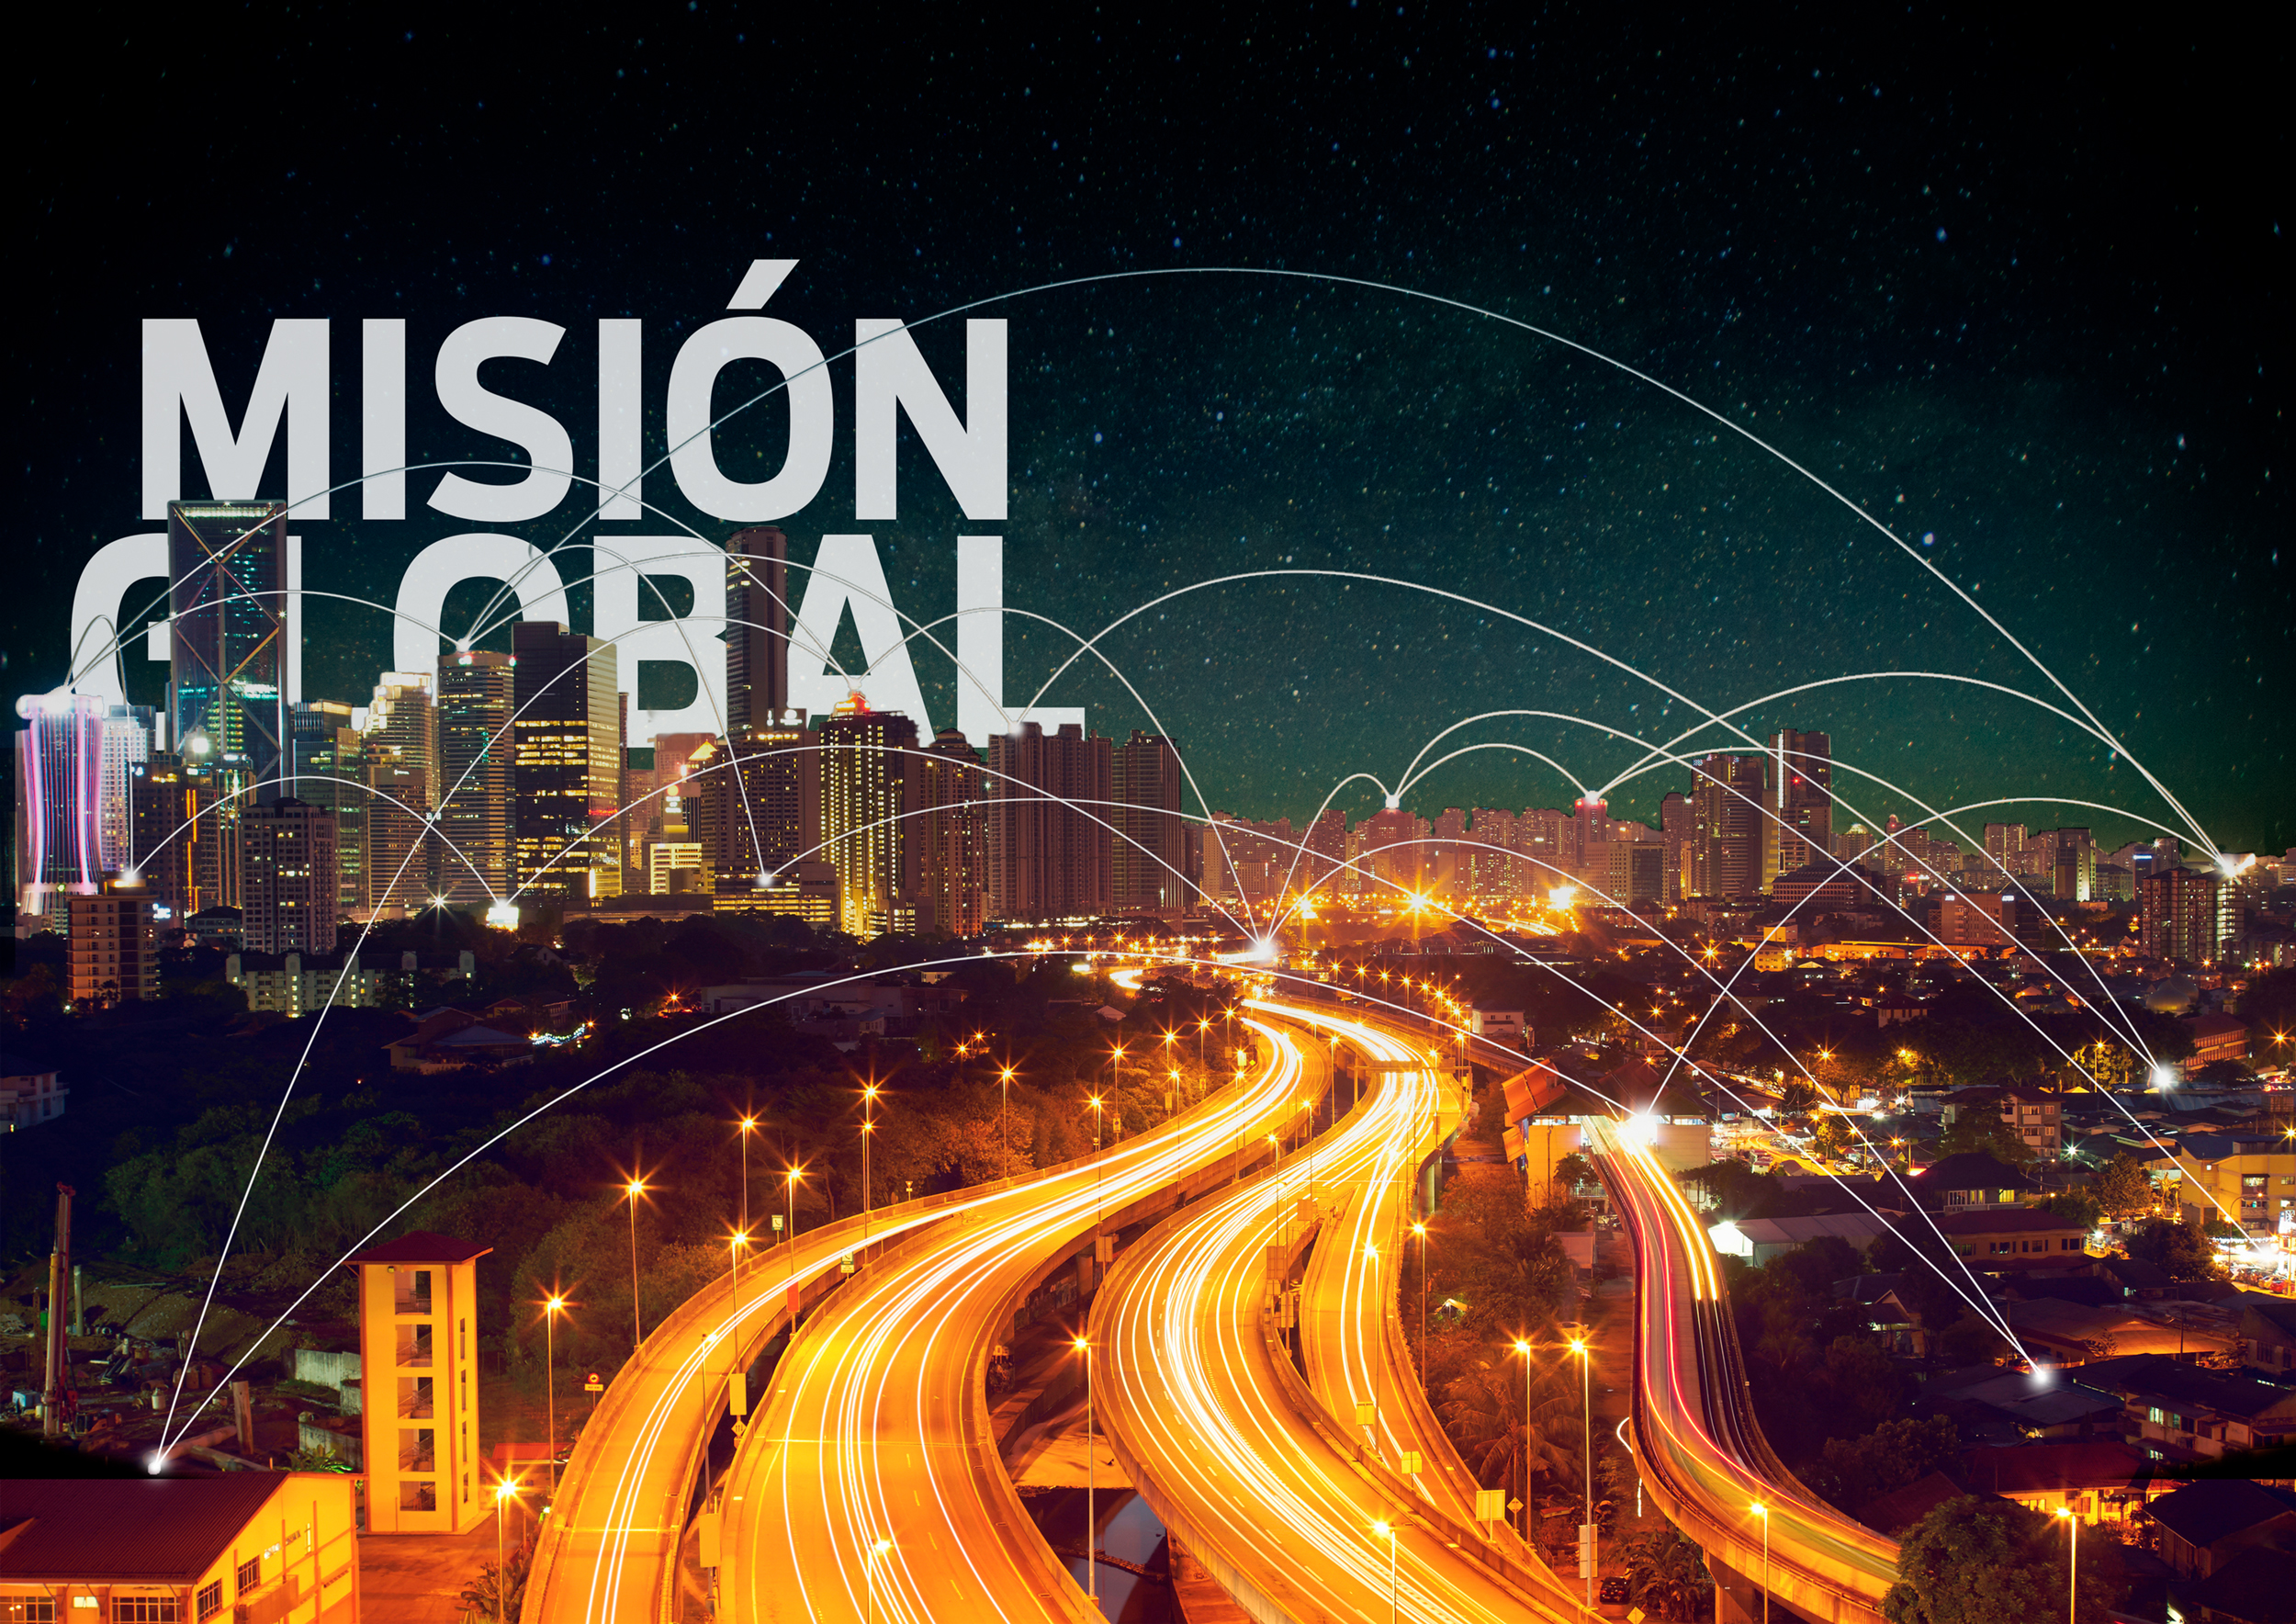 Mision Global - RA Noviembre 2017